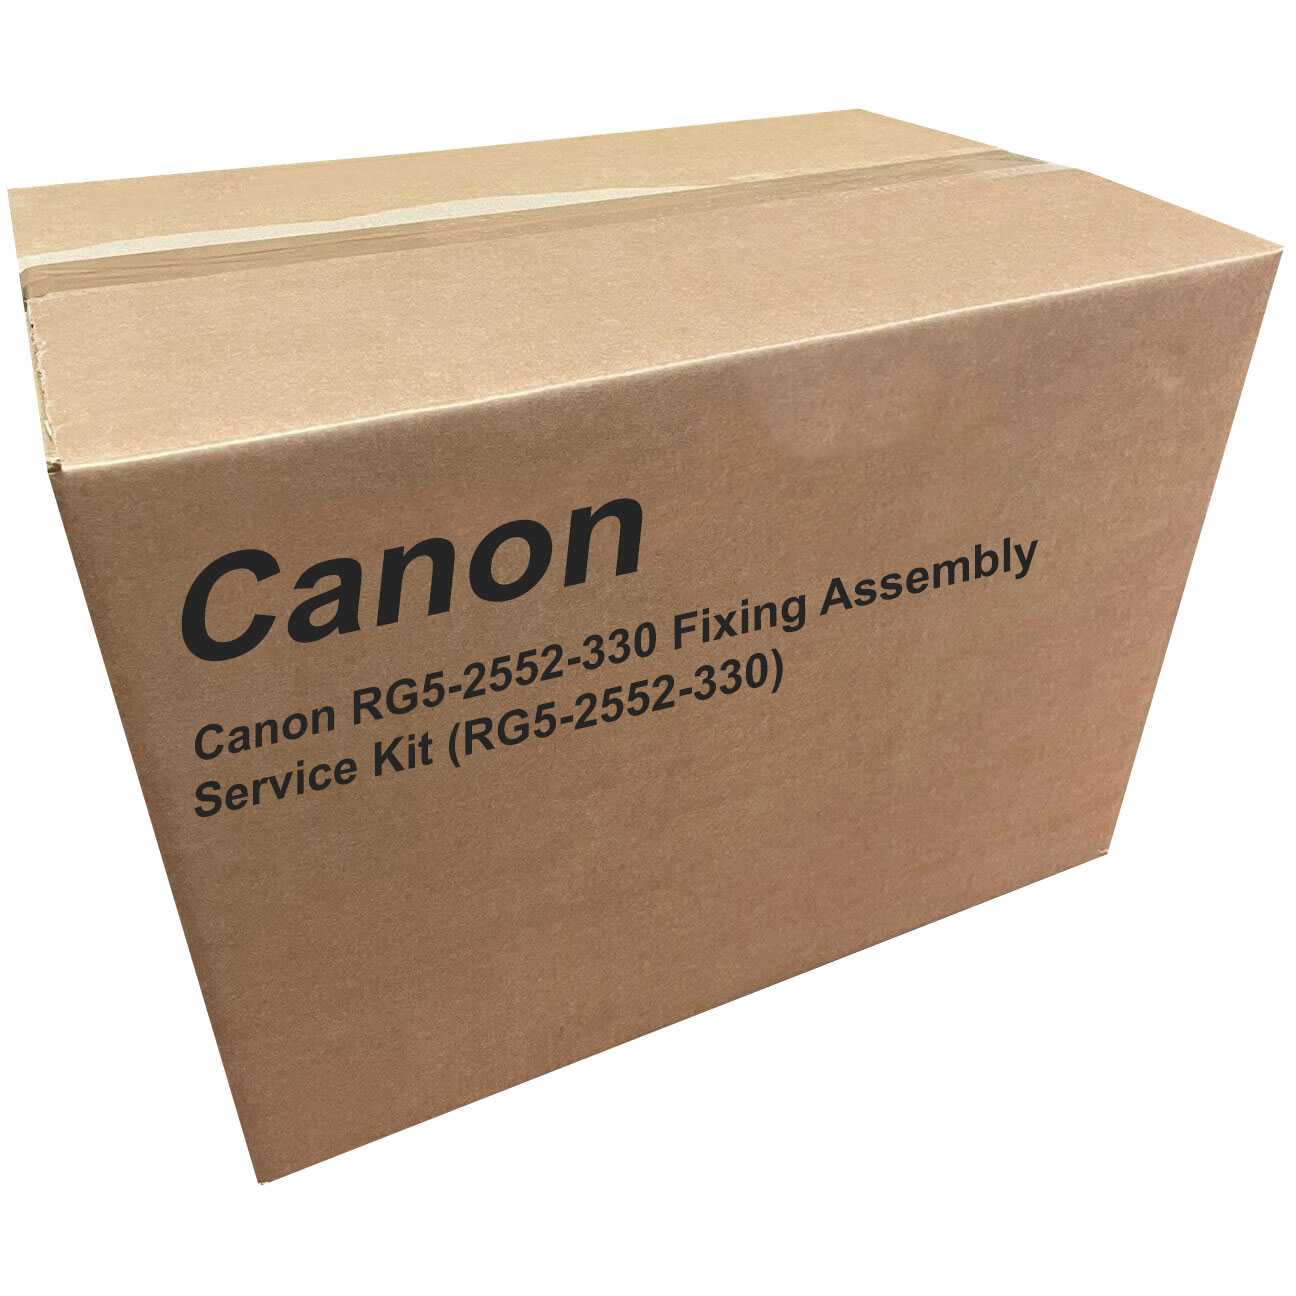 Original Canon RG5-2552-330 Fixing Assembly Service Kit (RG5-2552-330)